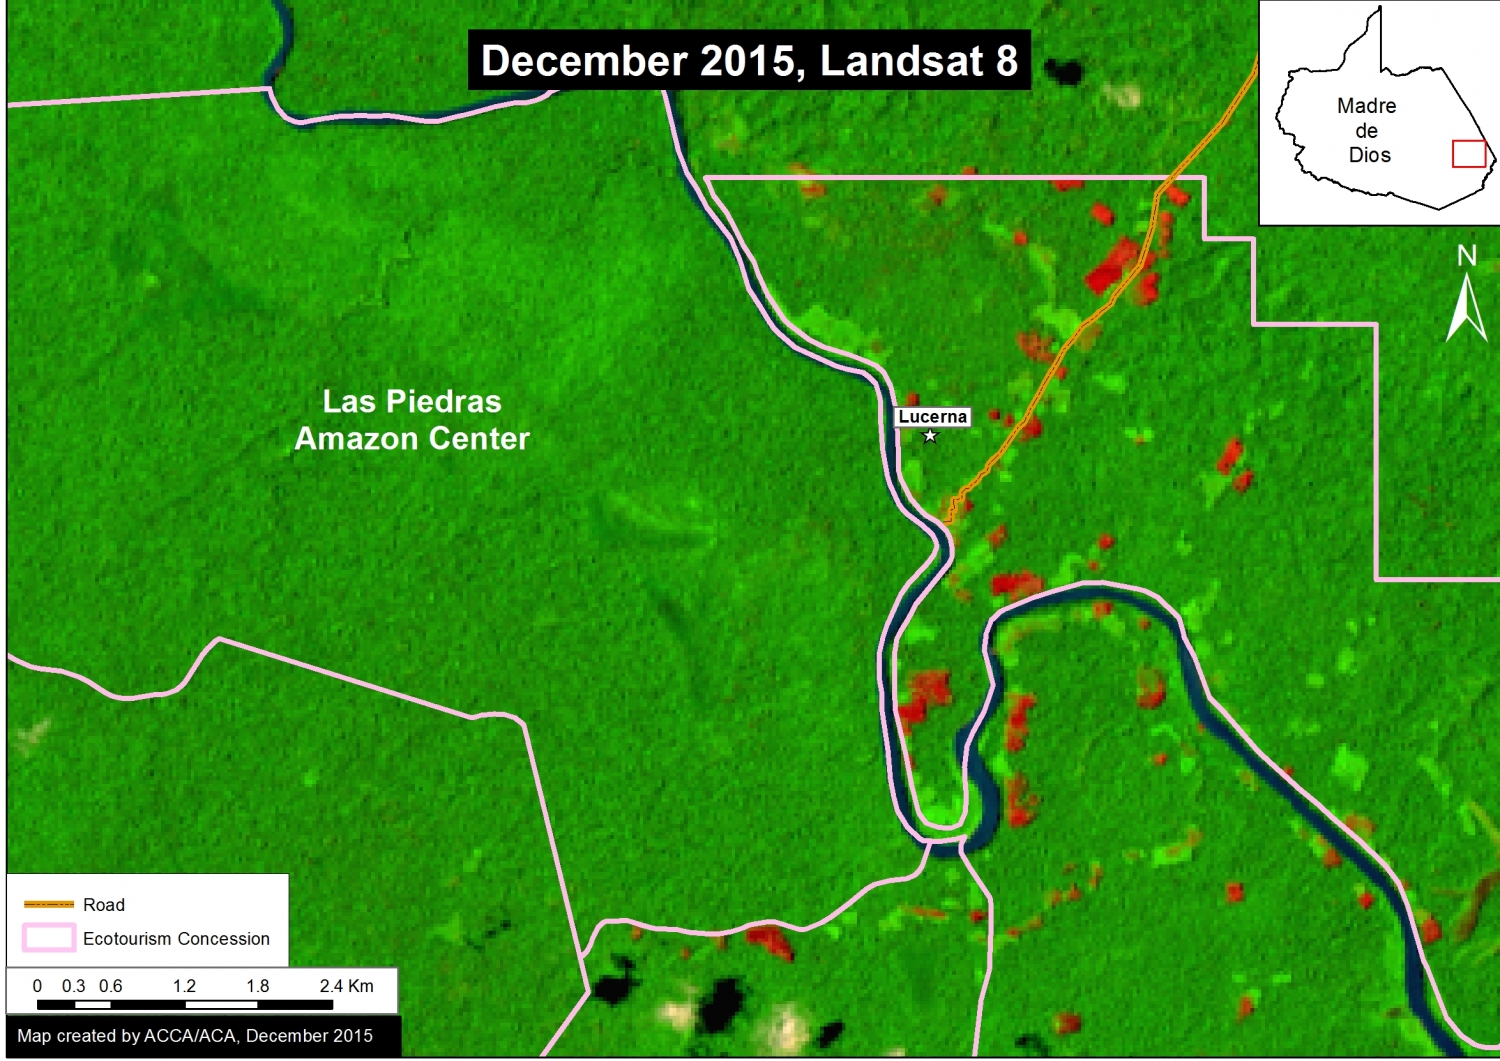 Image Xc. Recent Landsat image showing deforestation along lower Las Piedras. Data: USGS,MINAGRI.